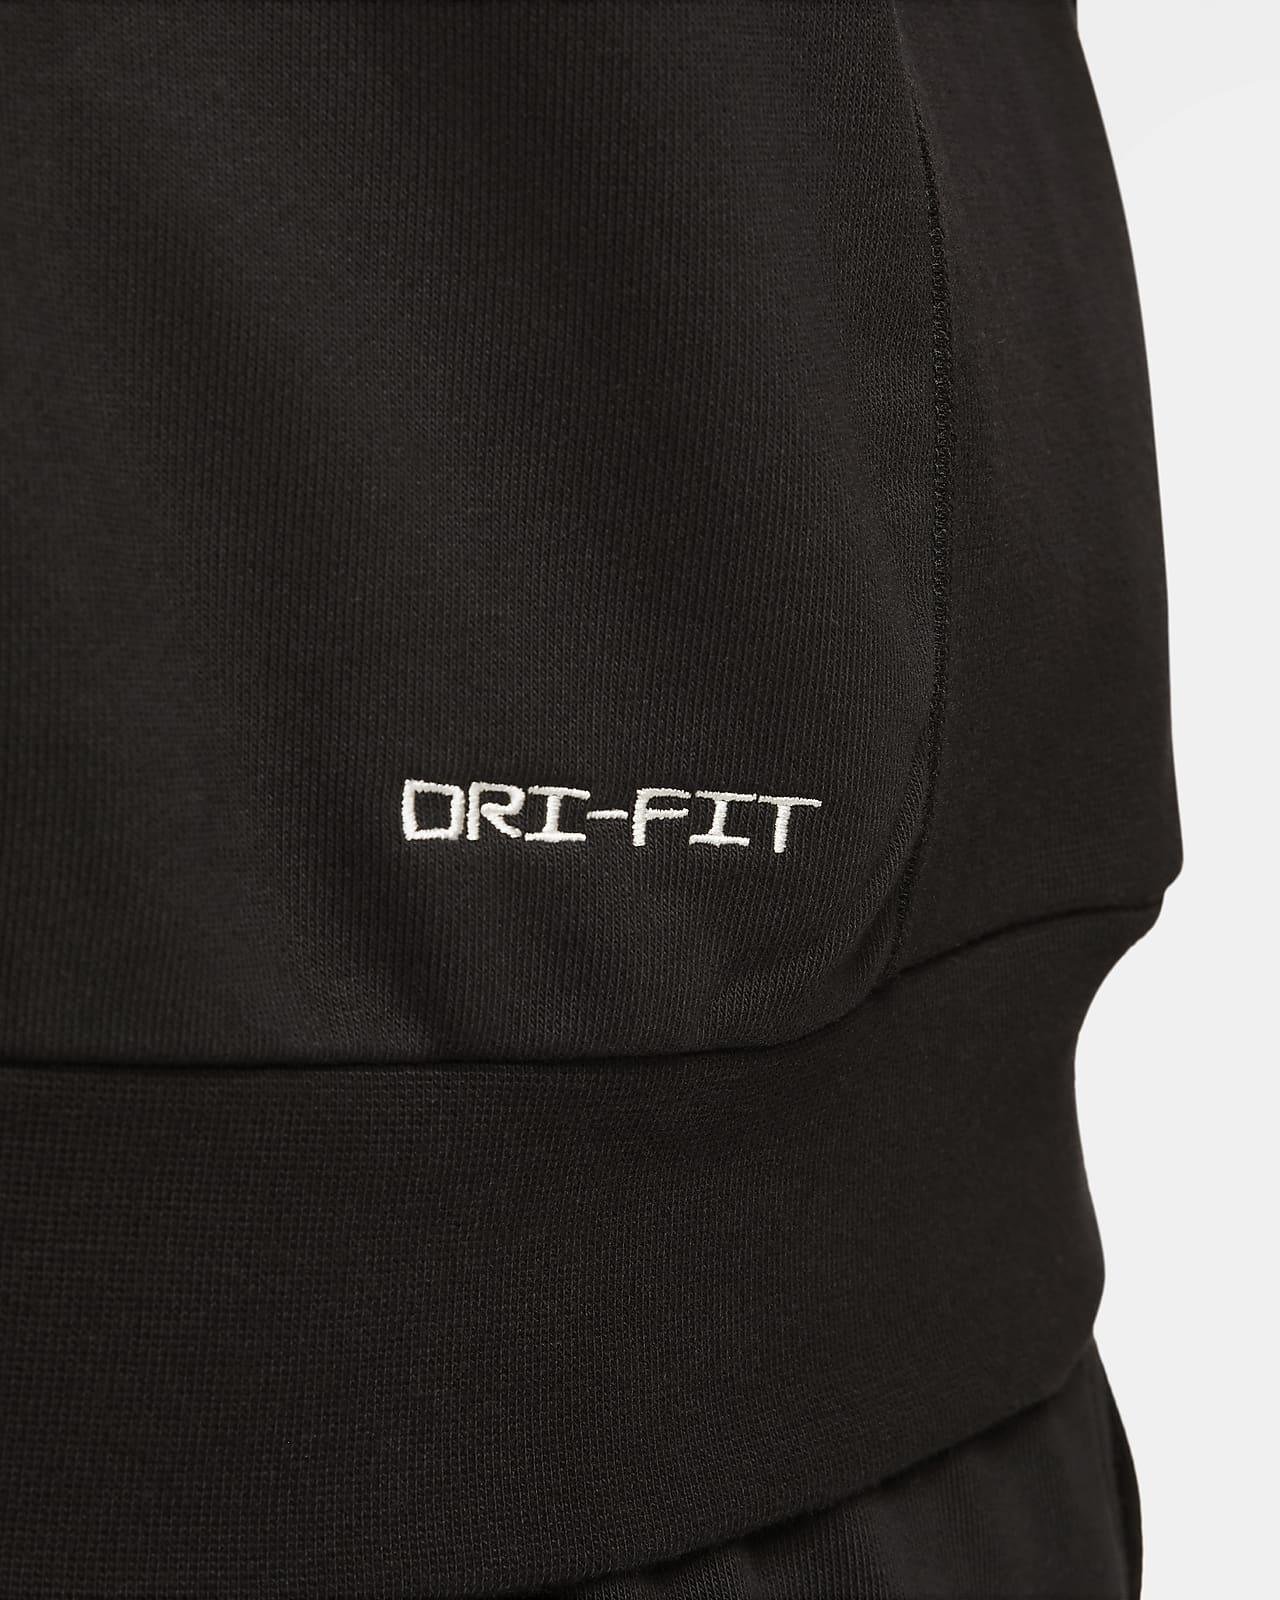 Dri-FIT Standard Issue Men's Short-Sleeve Basketball Top. Nike .com